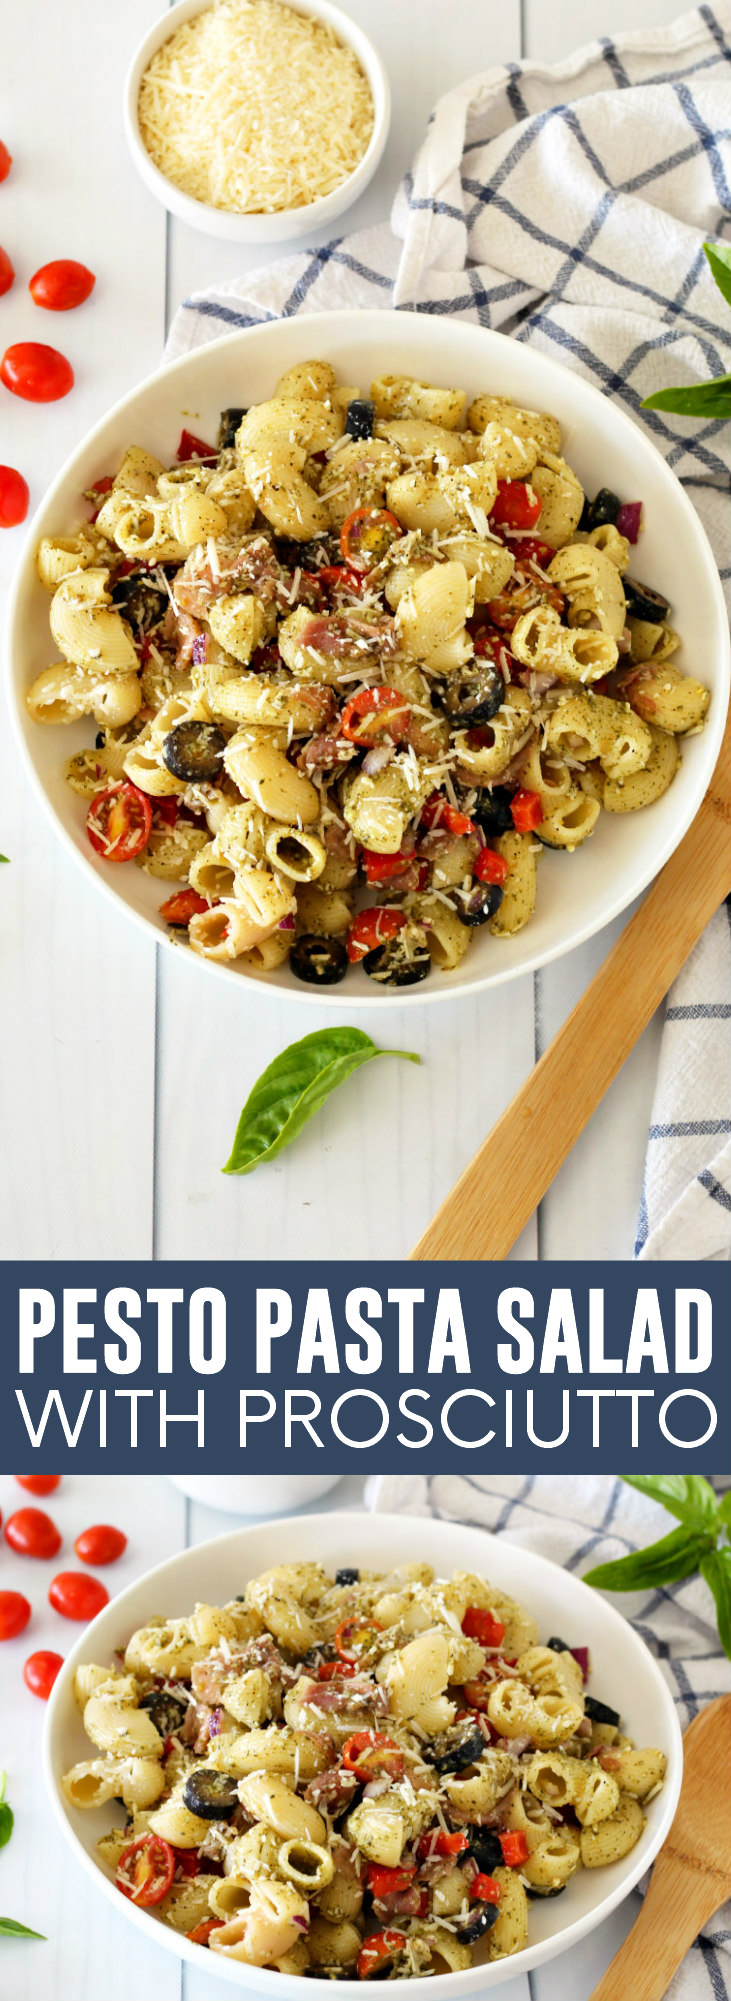 Pesto Pasta Salad with Prosciutto pinnable image.